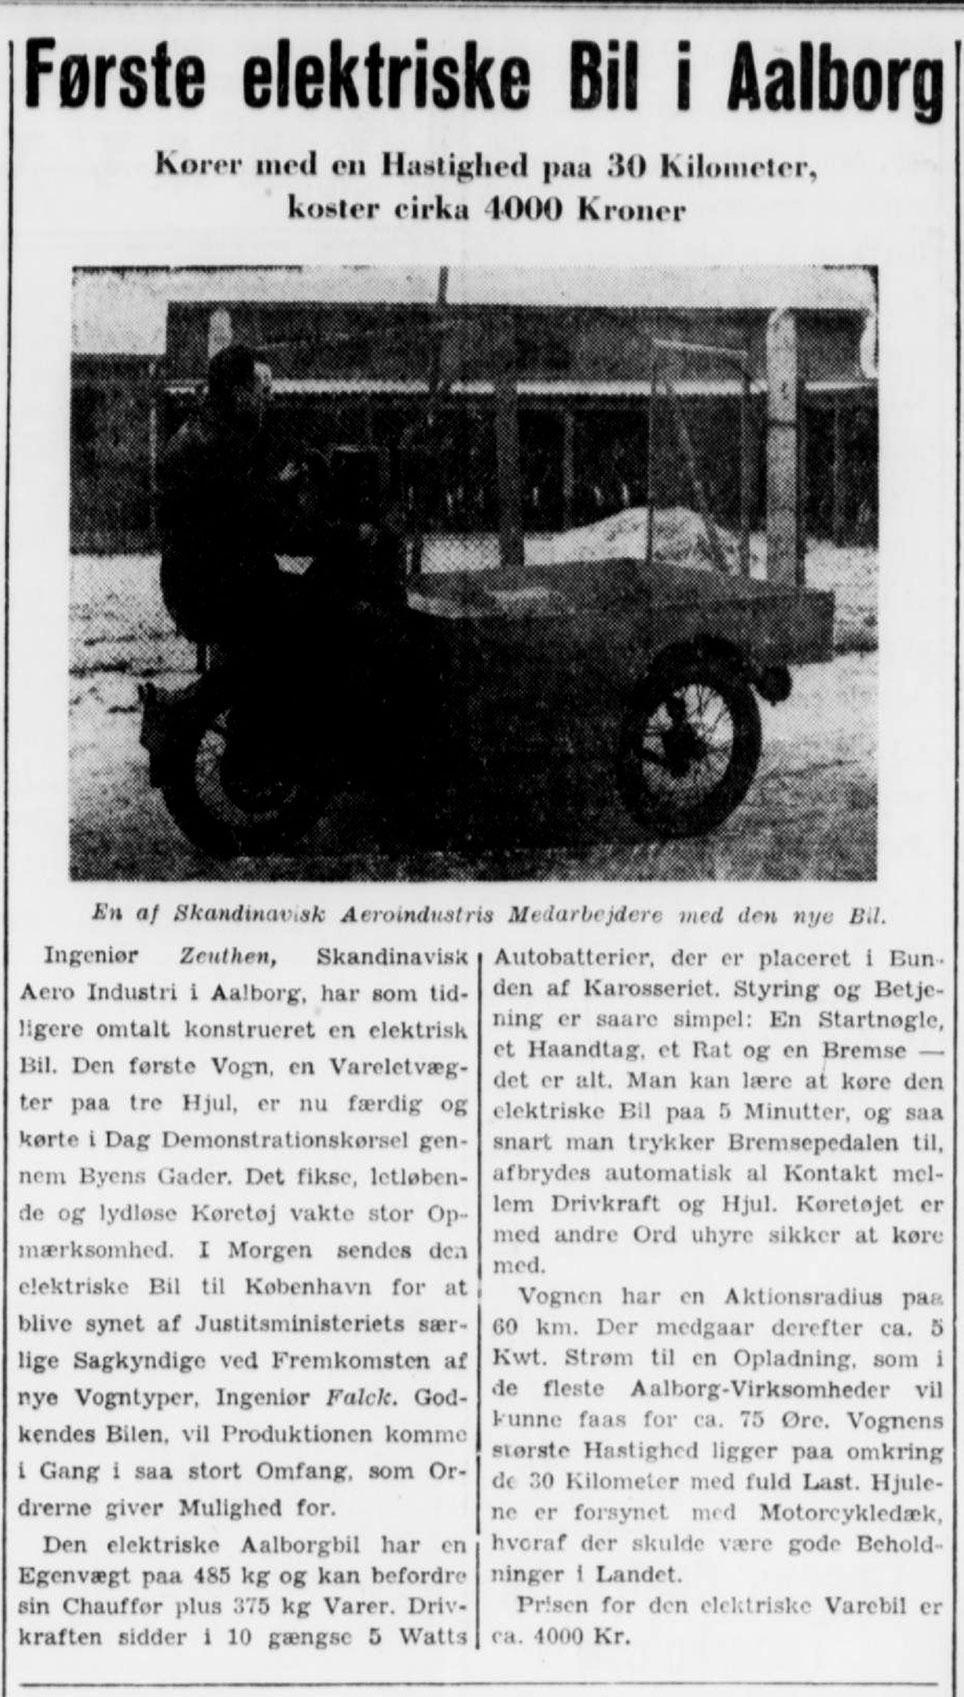 Omtale af den første elektriske bil fra Skandinavisk Aero Industri i Aalborg. Aalborg Amtstidende, 21. februar 1941, s.6